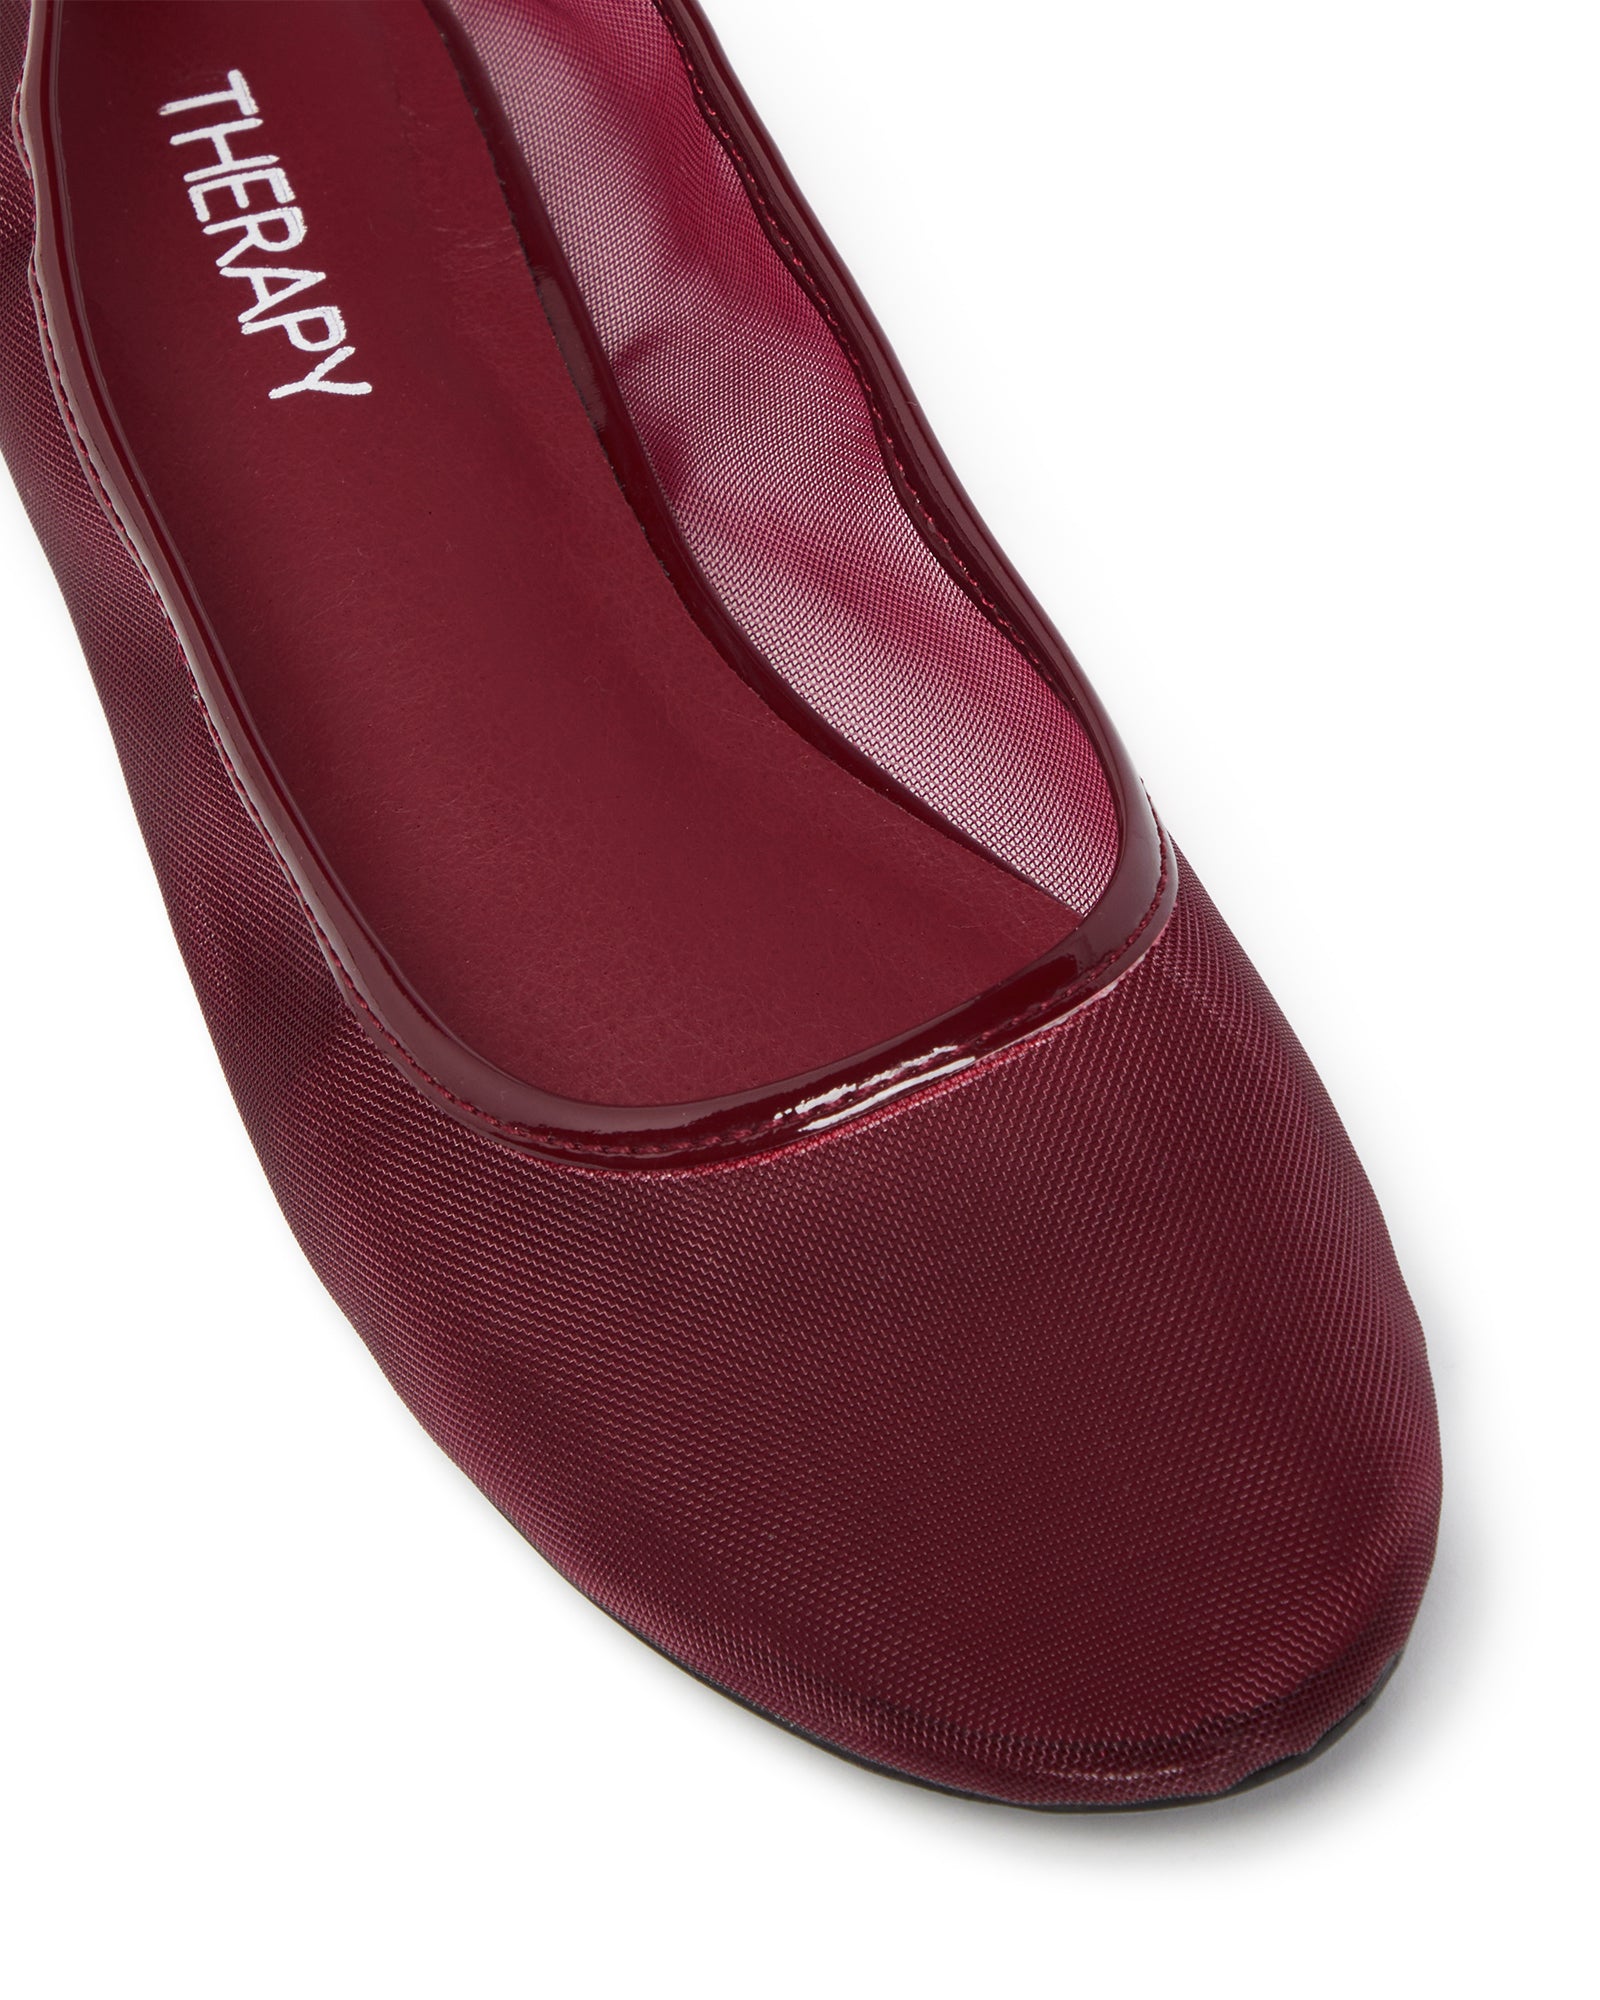 Therapy Shoes Arlo Cherry Patent  | Women's Flat | Ballet | Mesh